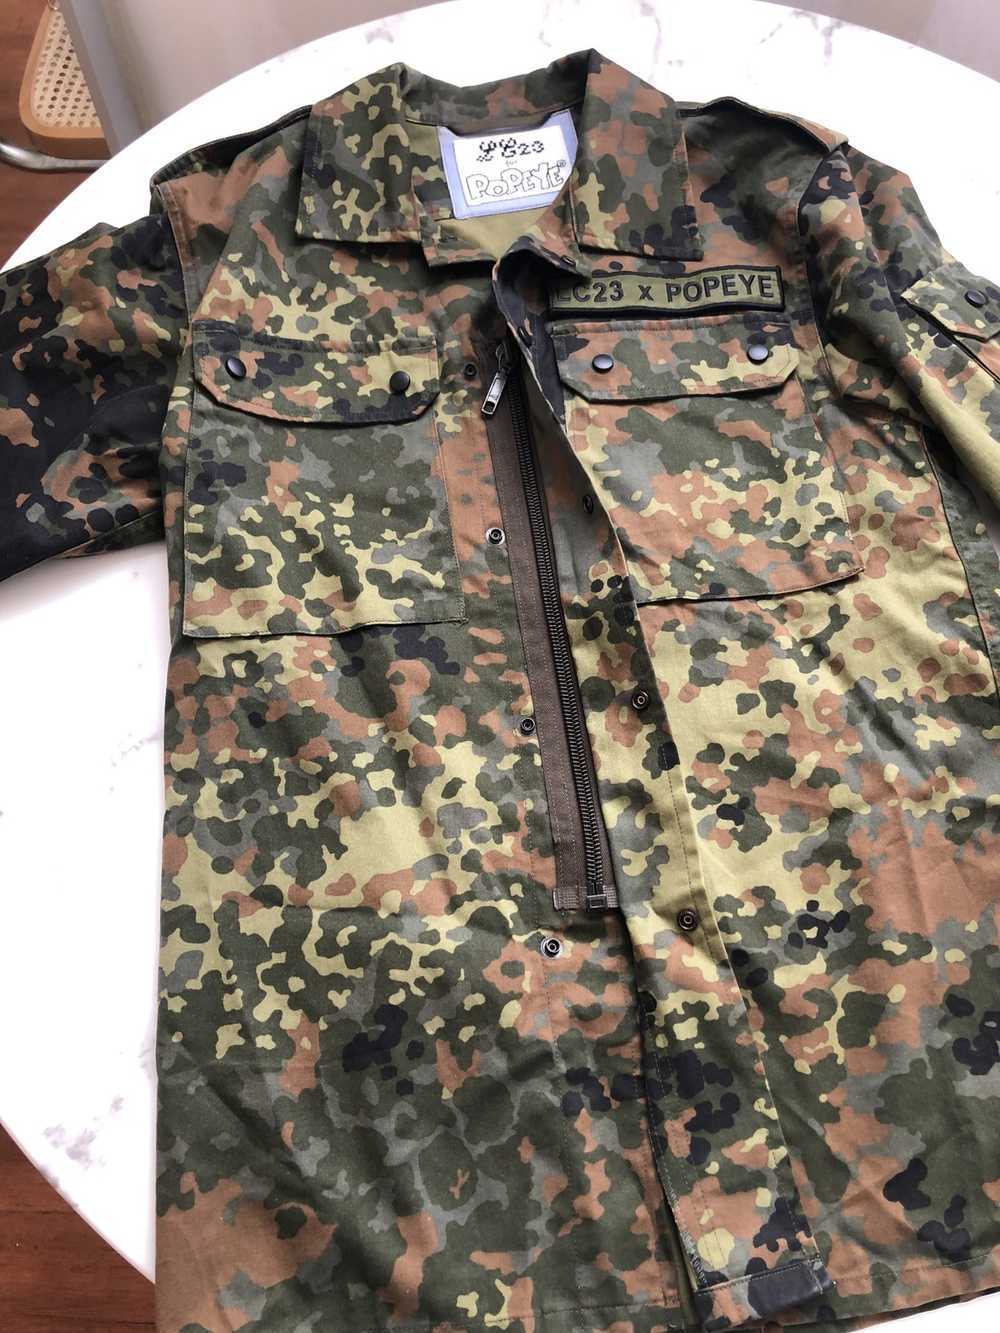 Italian Designers LC23 "Popeye" Military Jacket - image 3